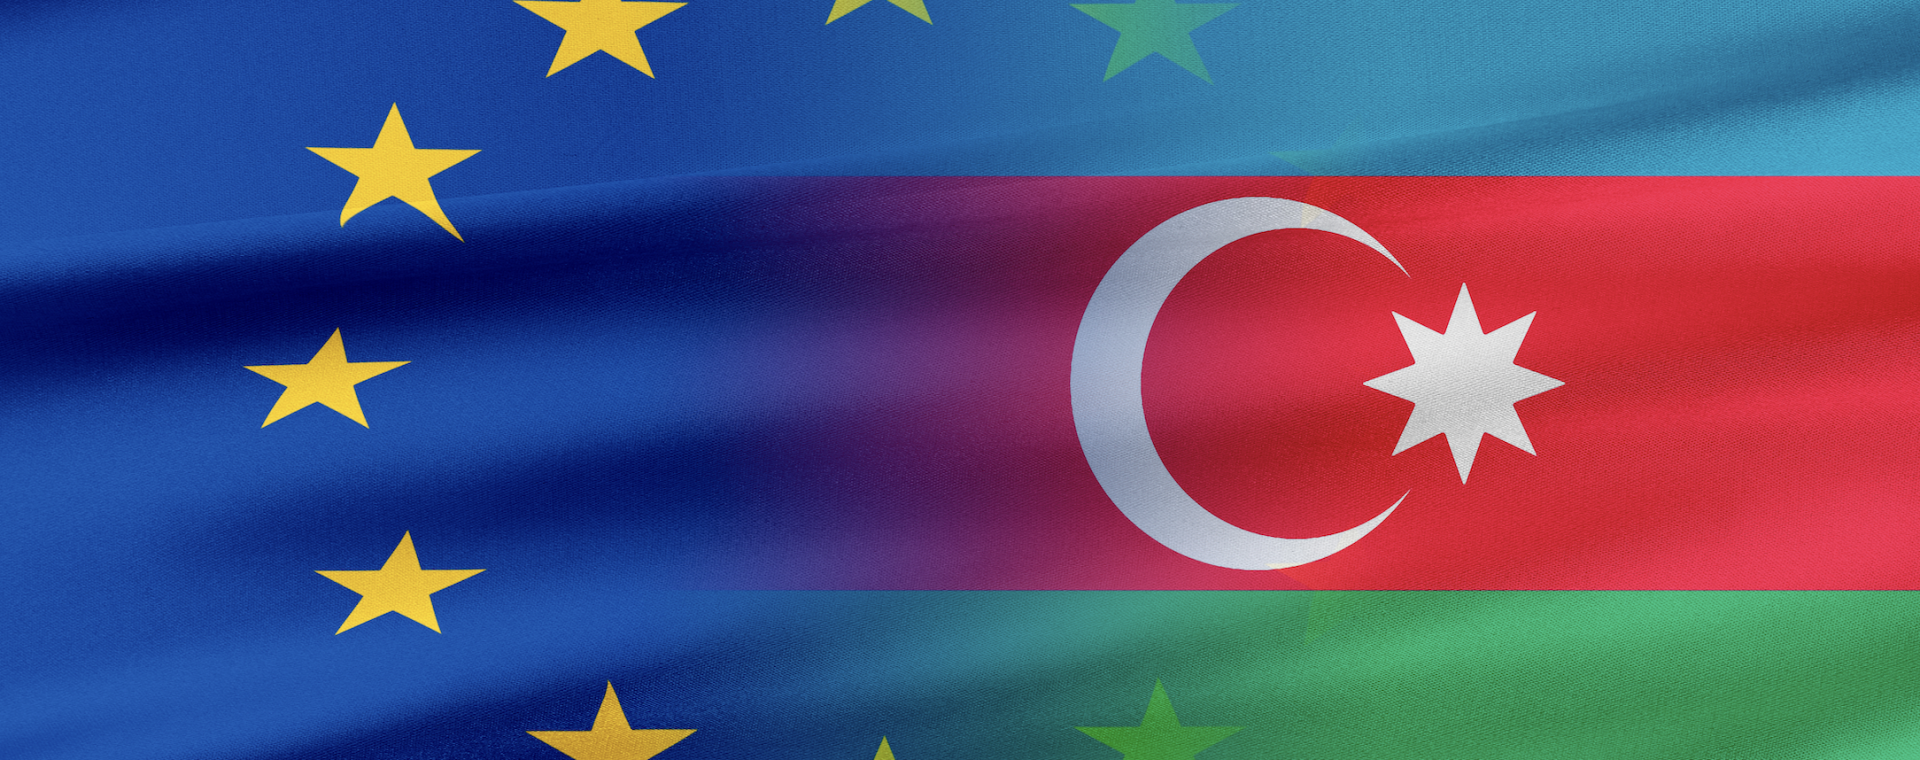 EU and Azerbaijan flags